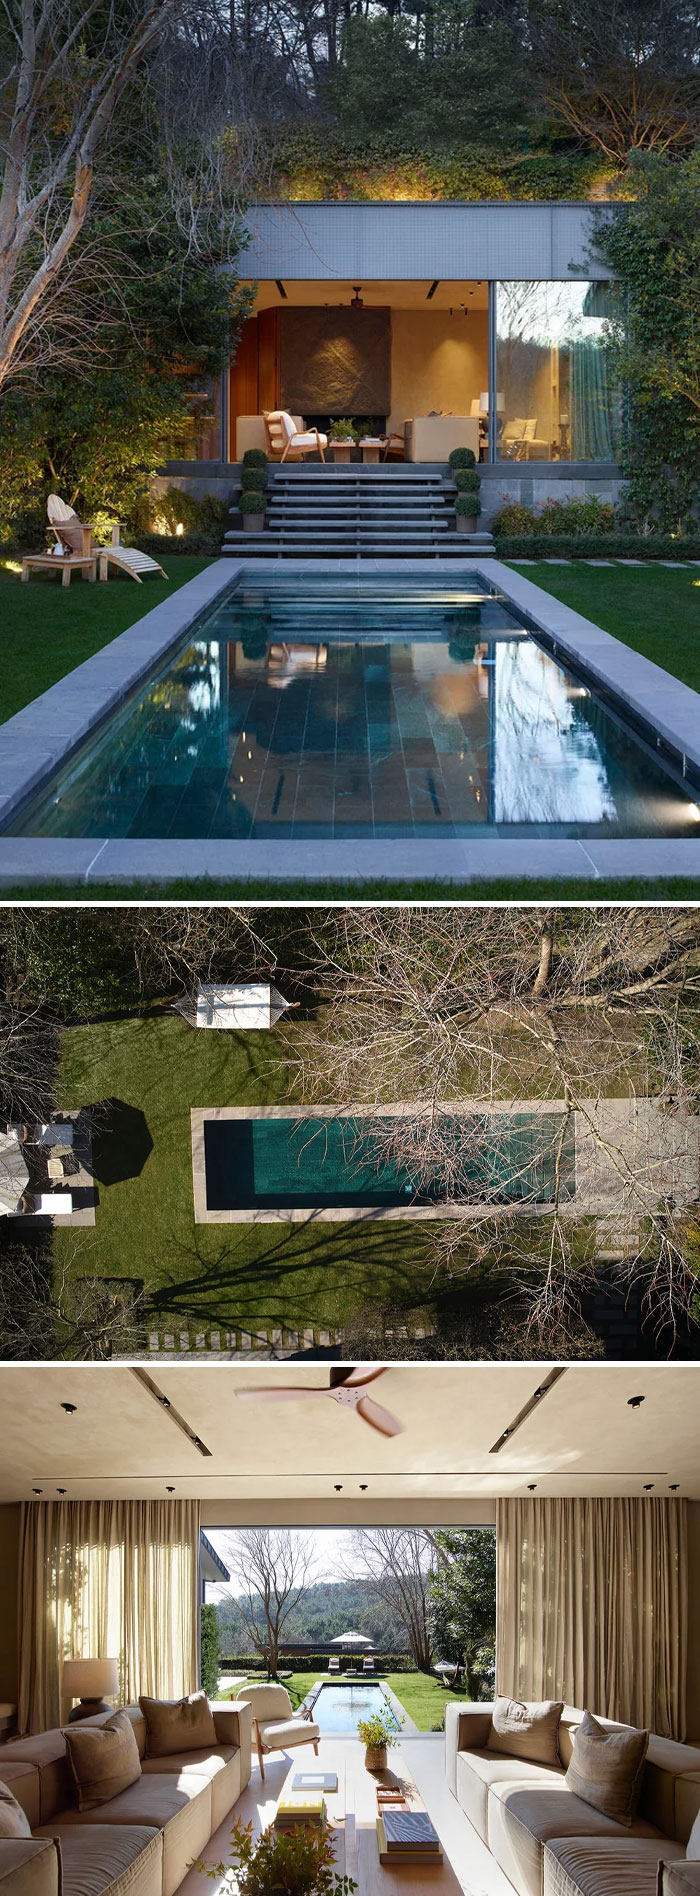 Habif Architects Designs E Pool House In Bahçeköy, Sariyer, Istanbul, Turkey